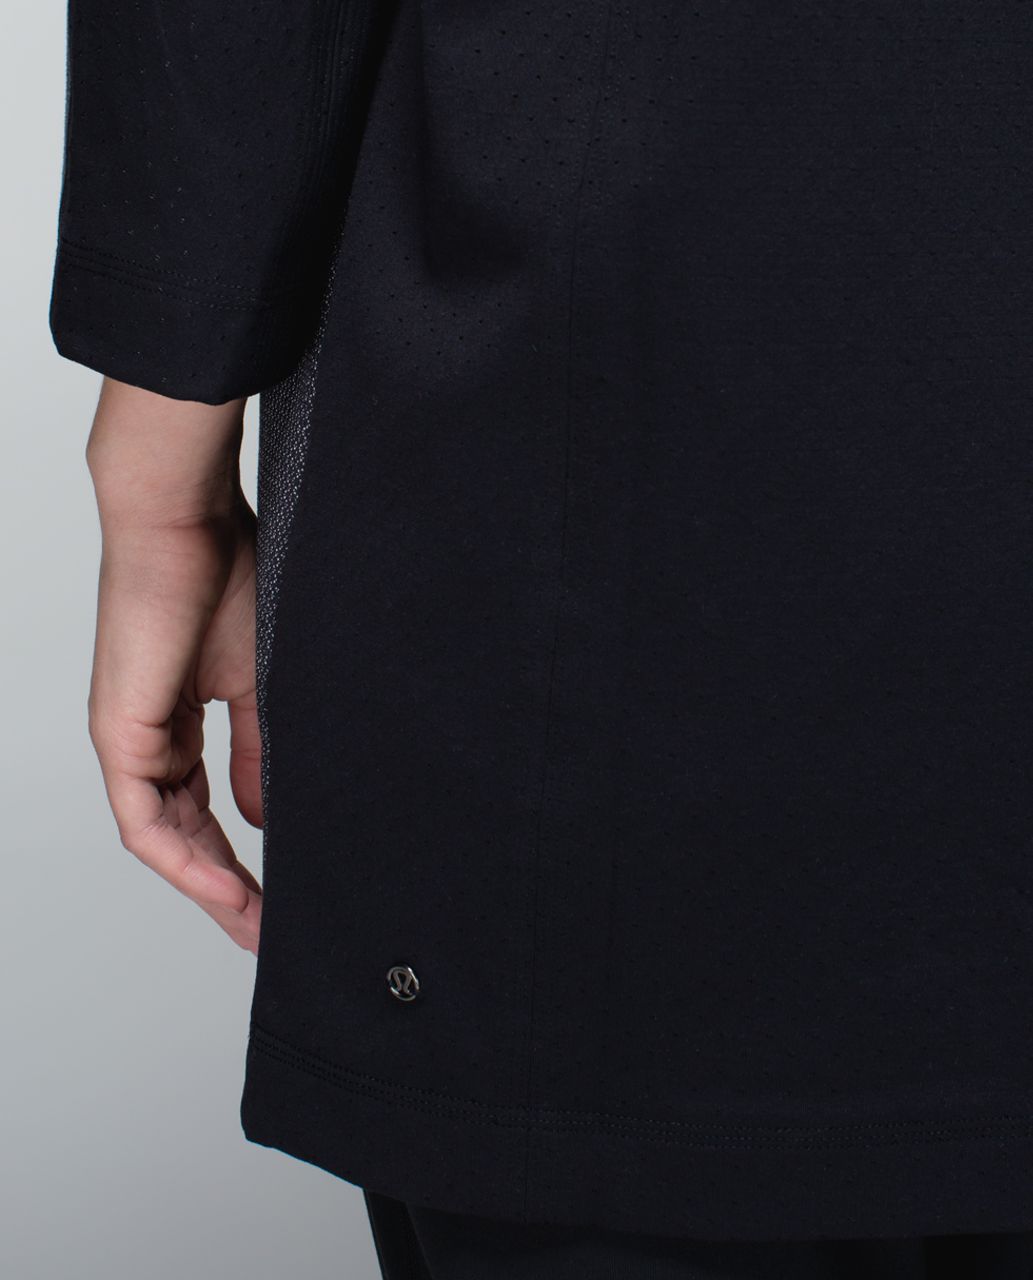 Lululemon Black And Gray Cocoon Car Coat Longline Snap Front Jacket Size XS